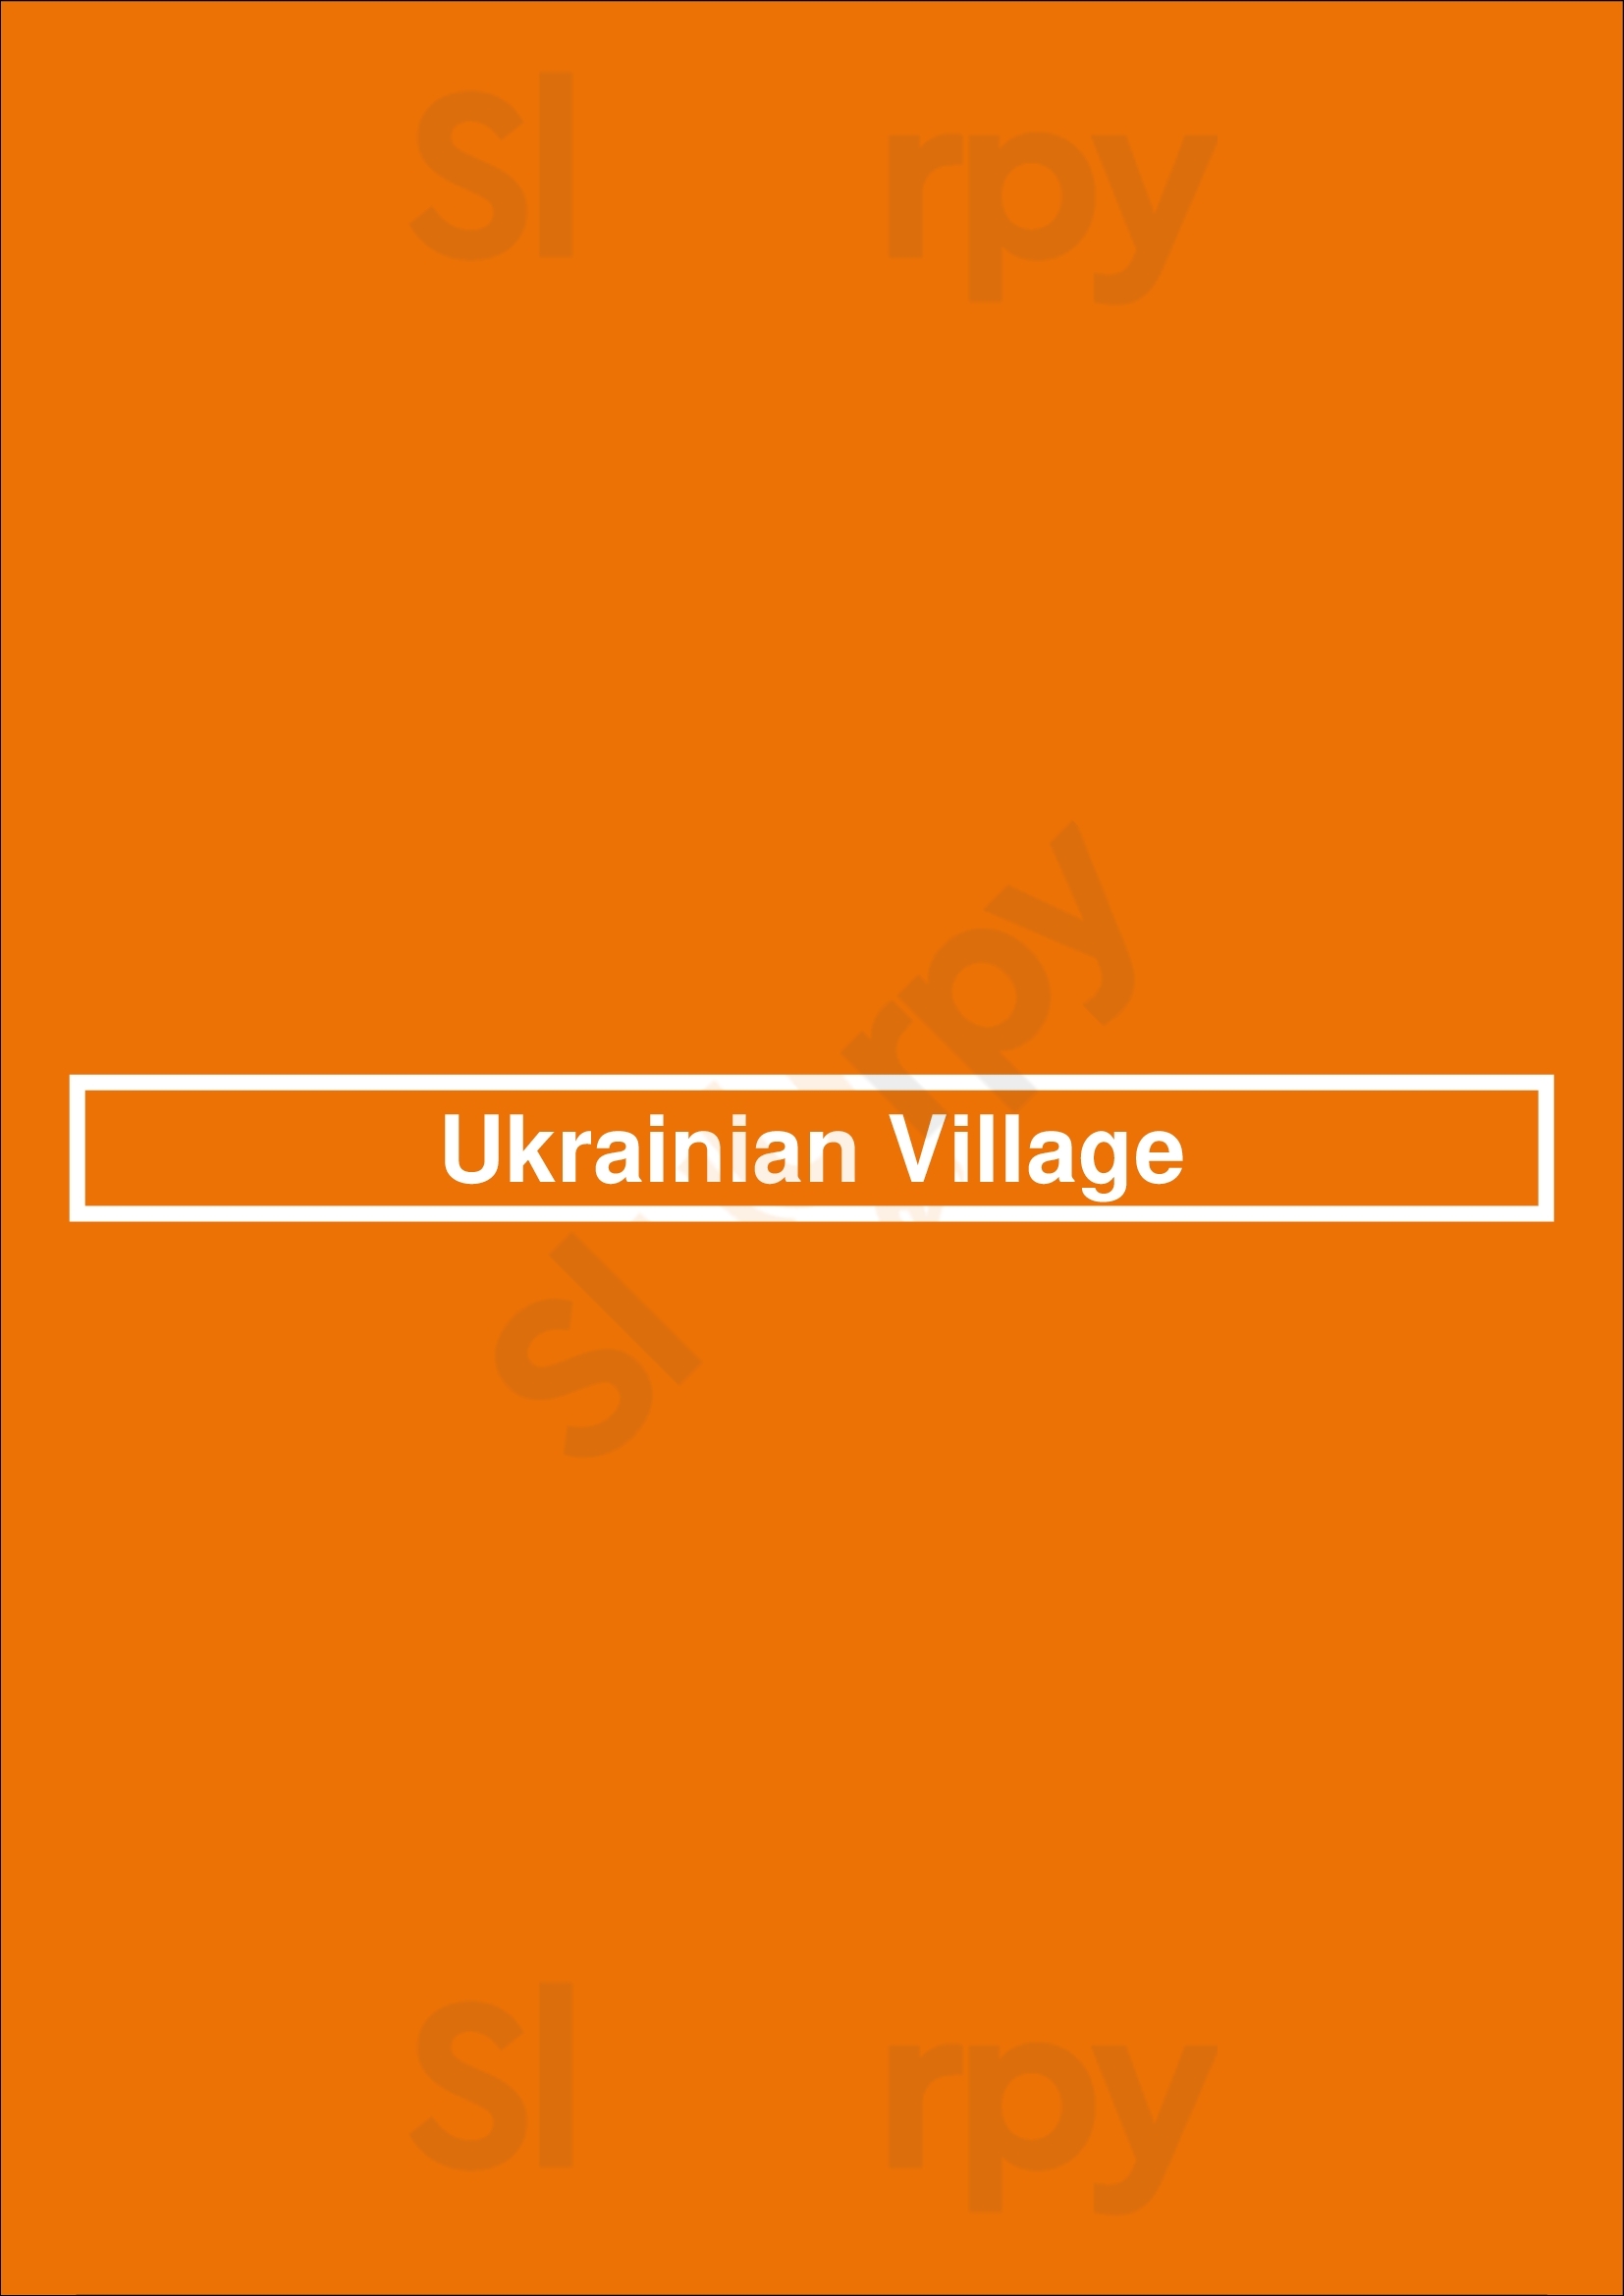 Ukrainian Village Vancouver Menu - 1